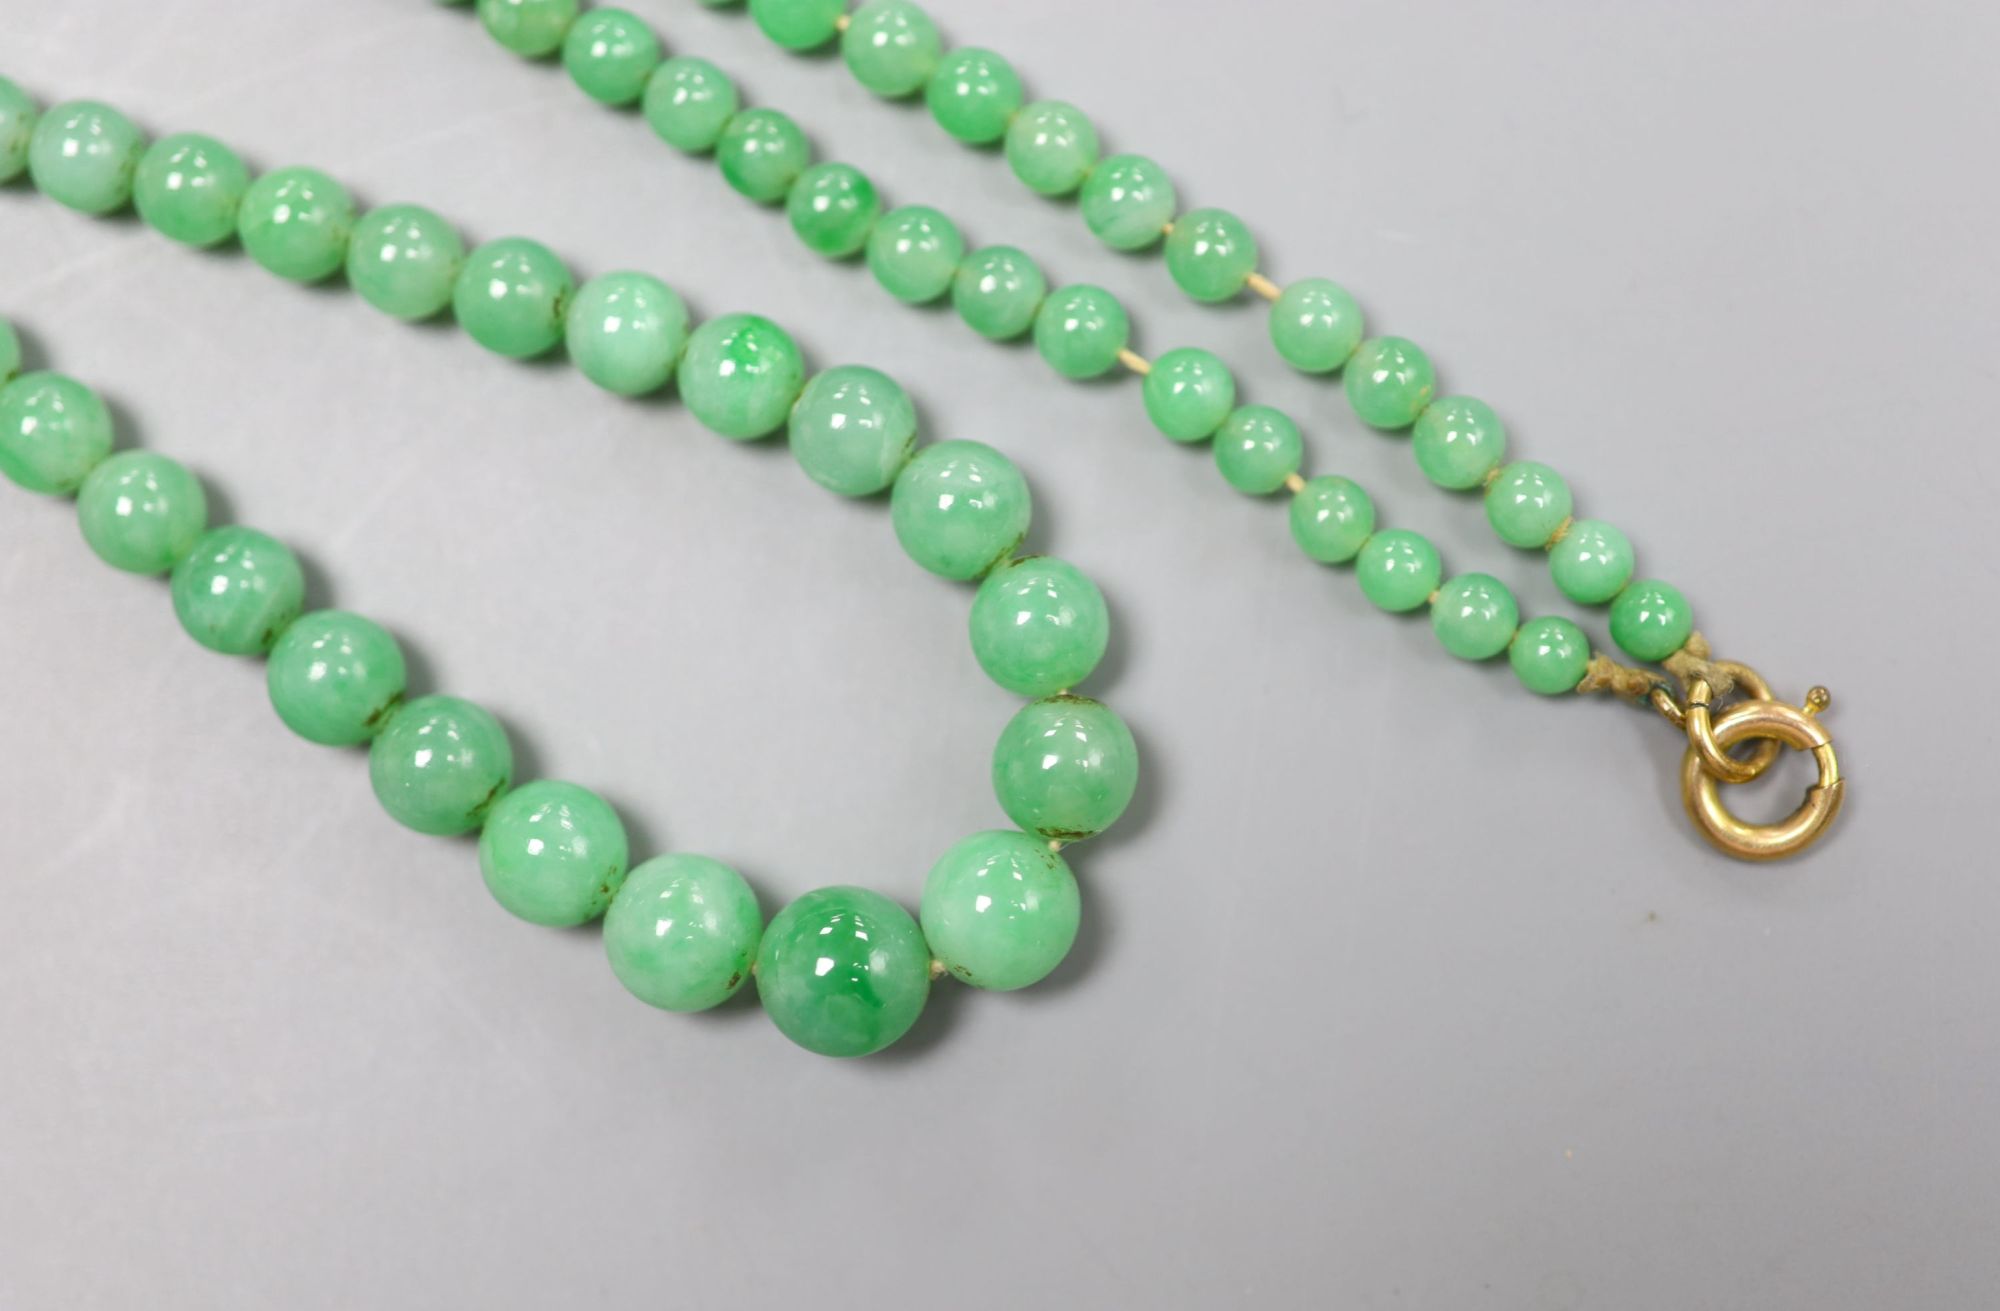 A single strand graduated jade bead necklace, 44cm, gross weight 23.6 grams.